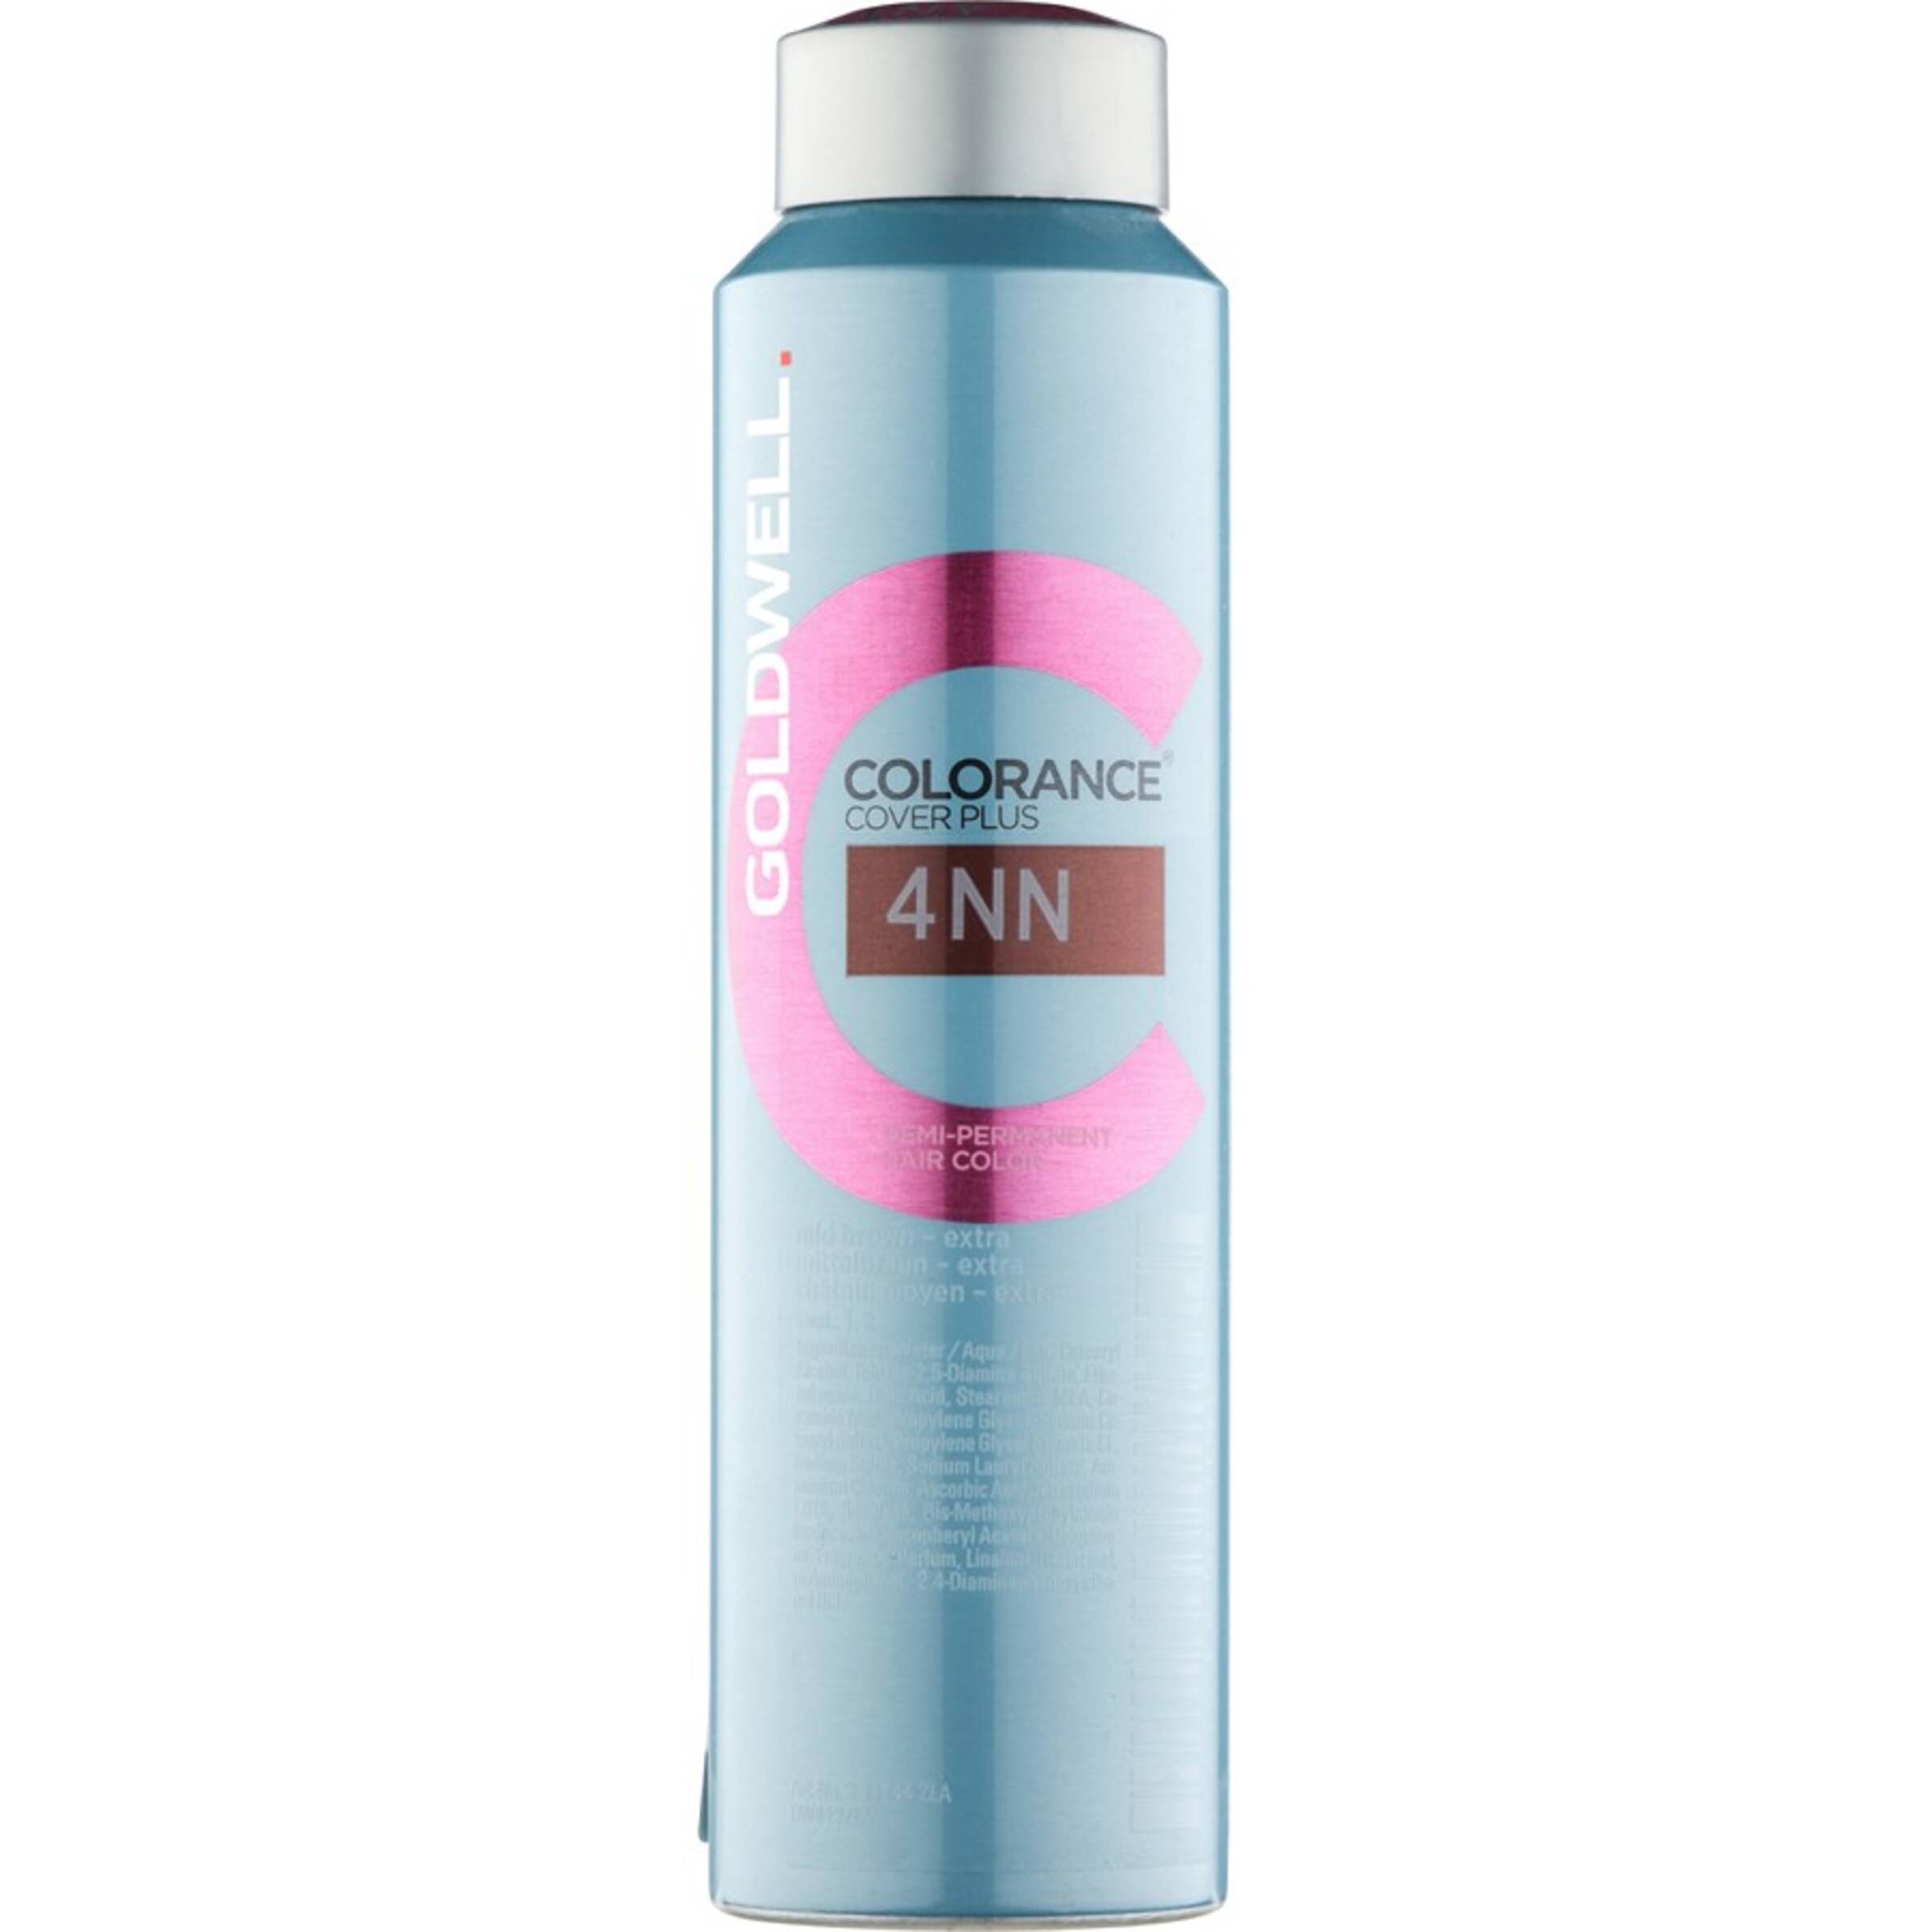 Goldwell Haarfarben Cover Plus NN-Shades Demi-Permanent Color in Braun 